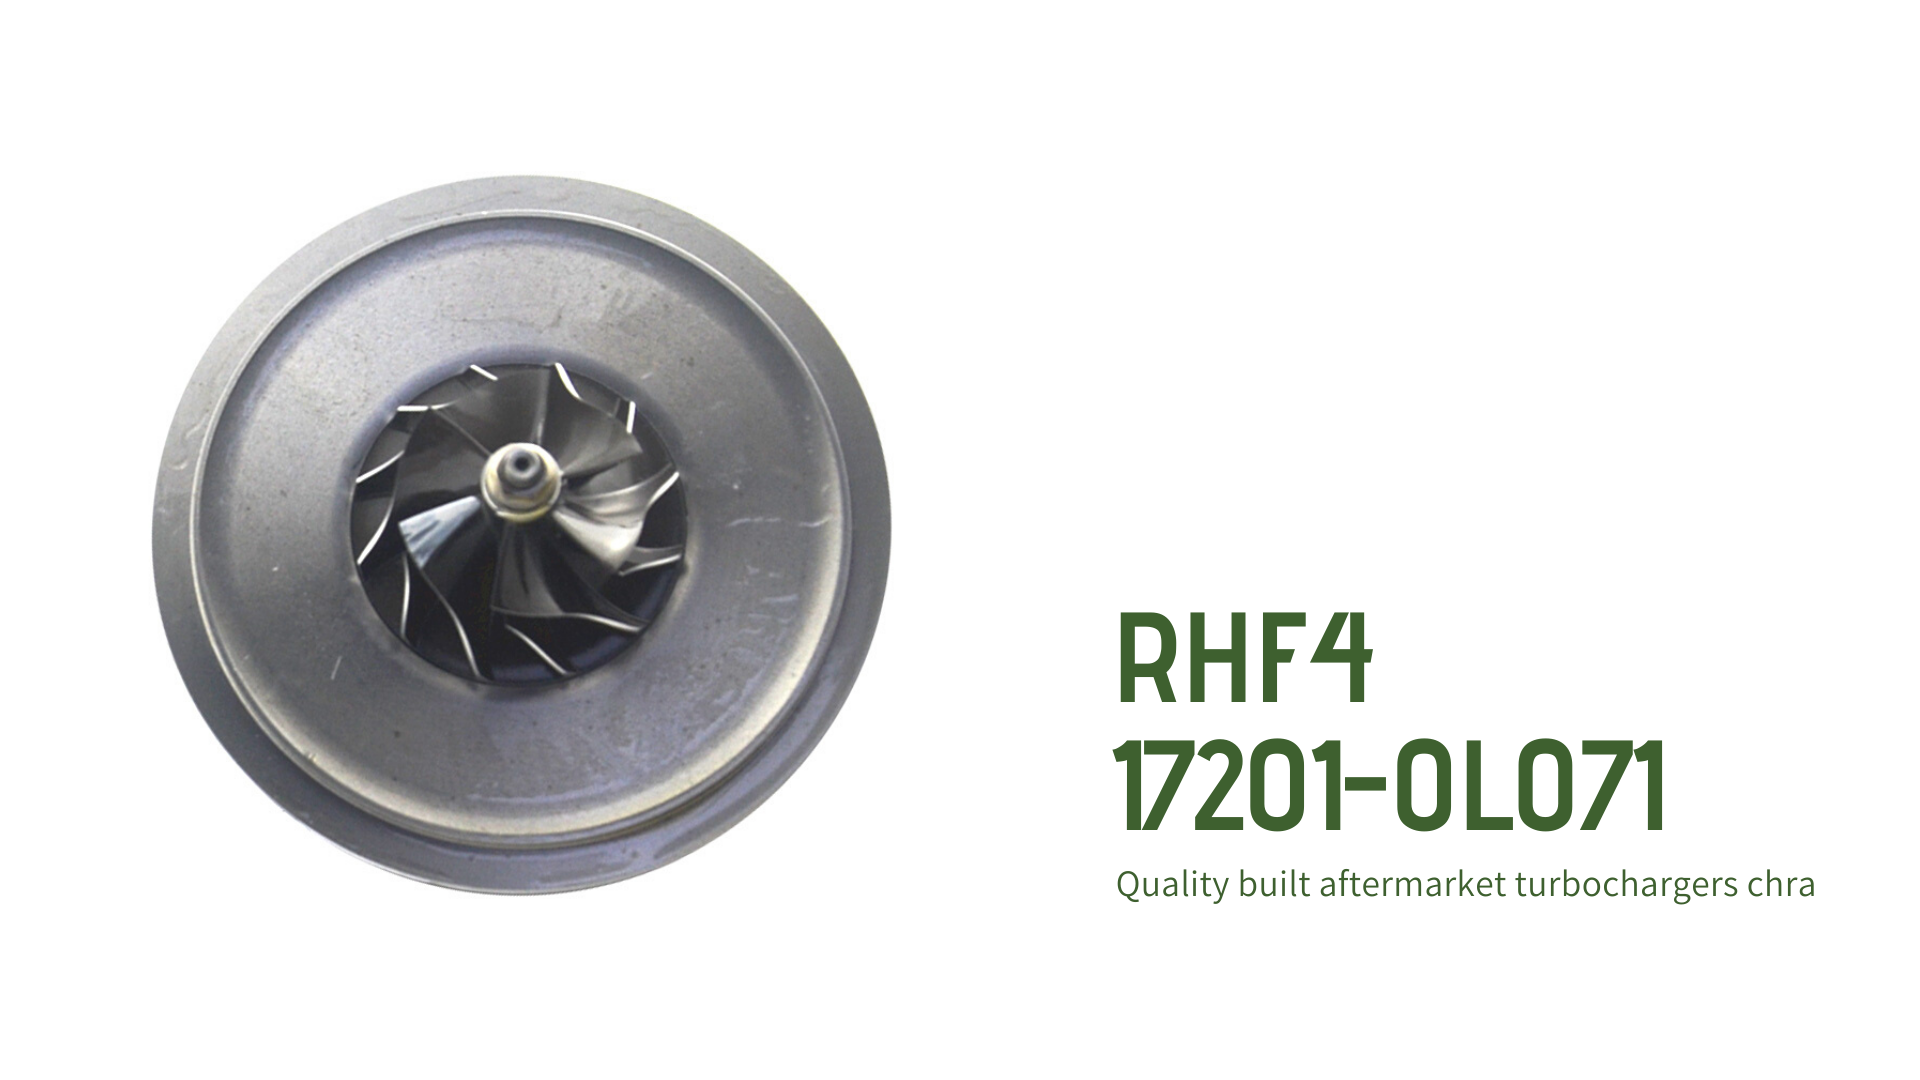 780L071 Cartridge For RHF4 17201-0L071 Turbocharger